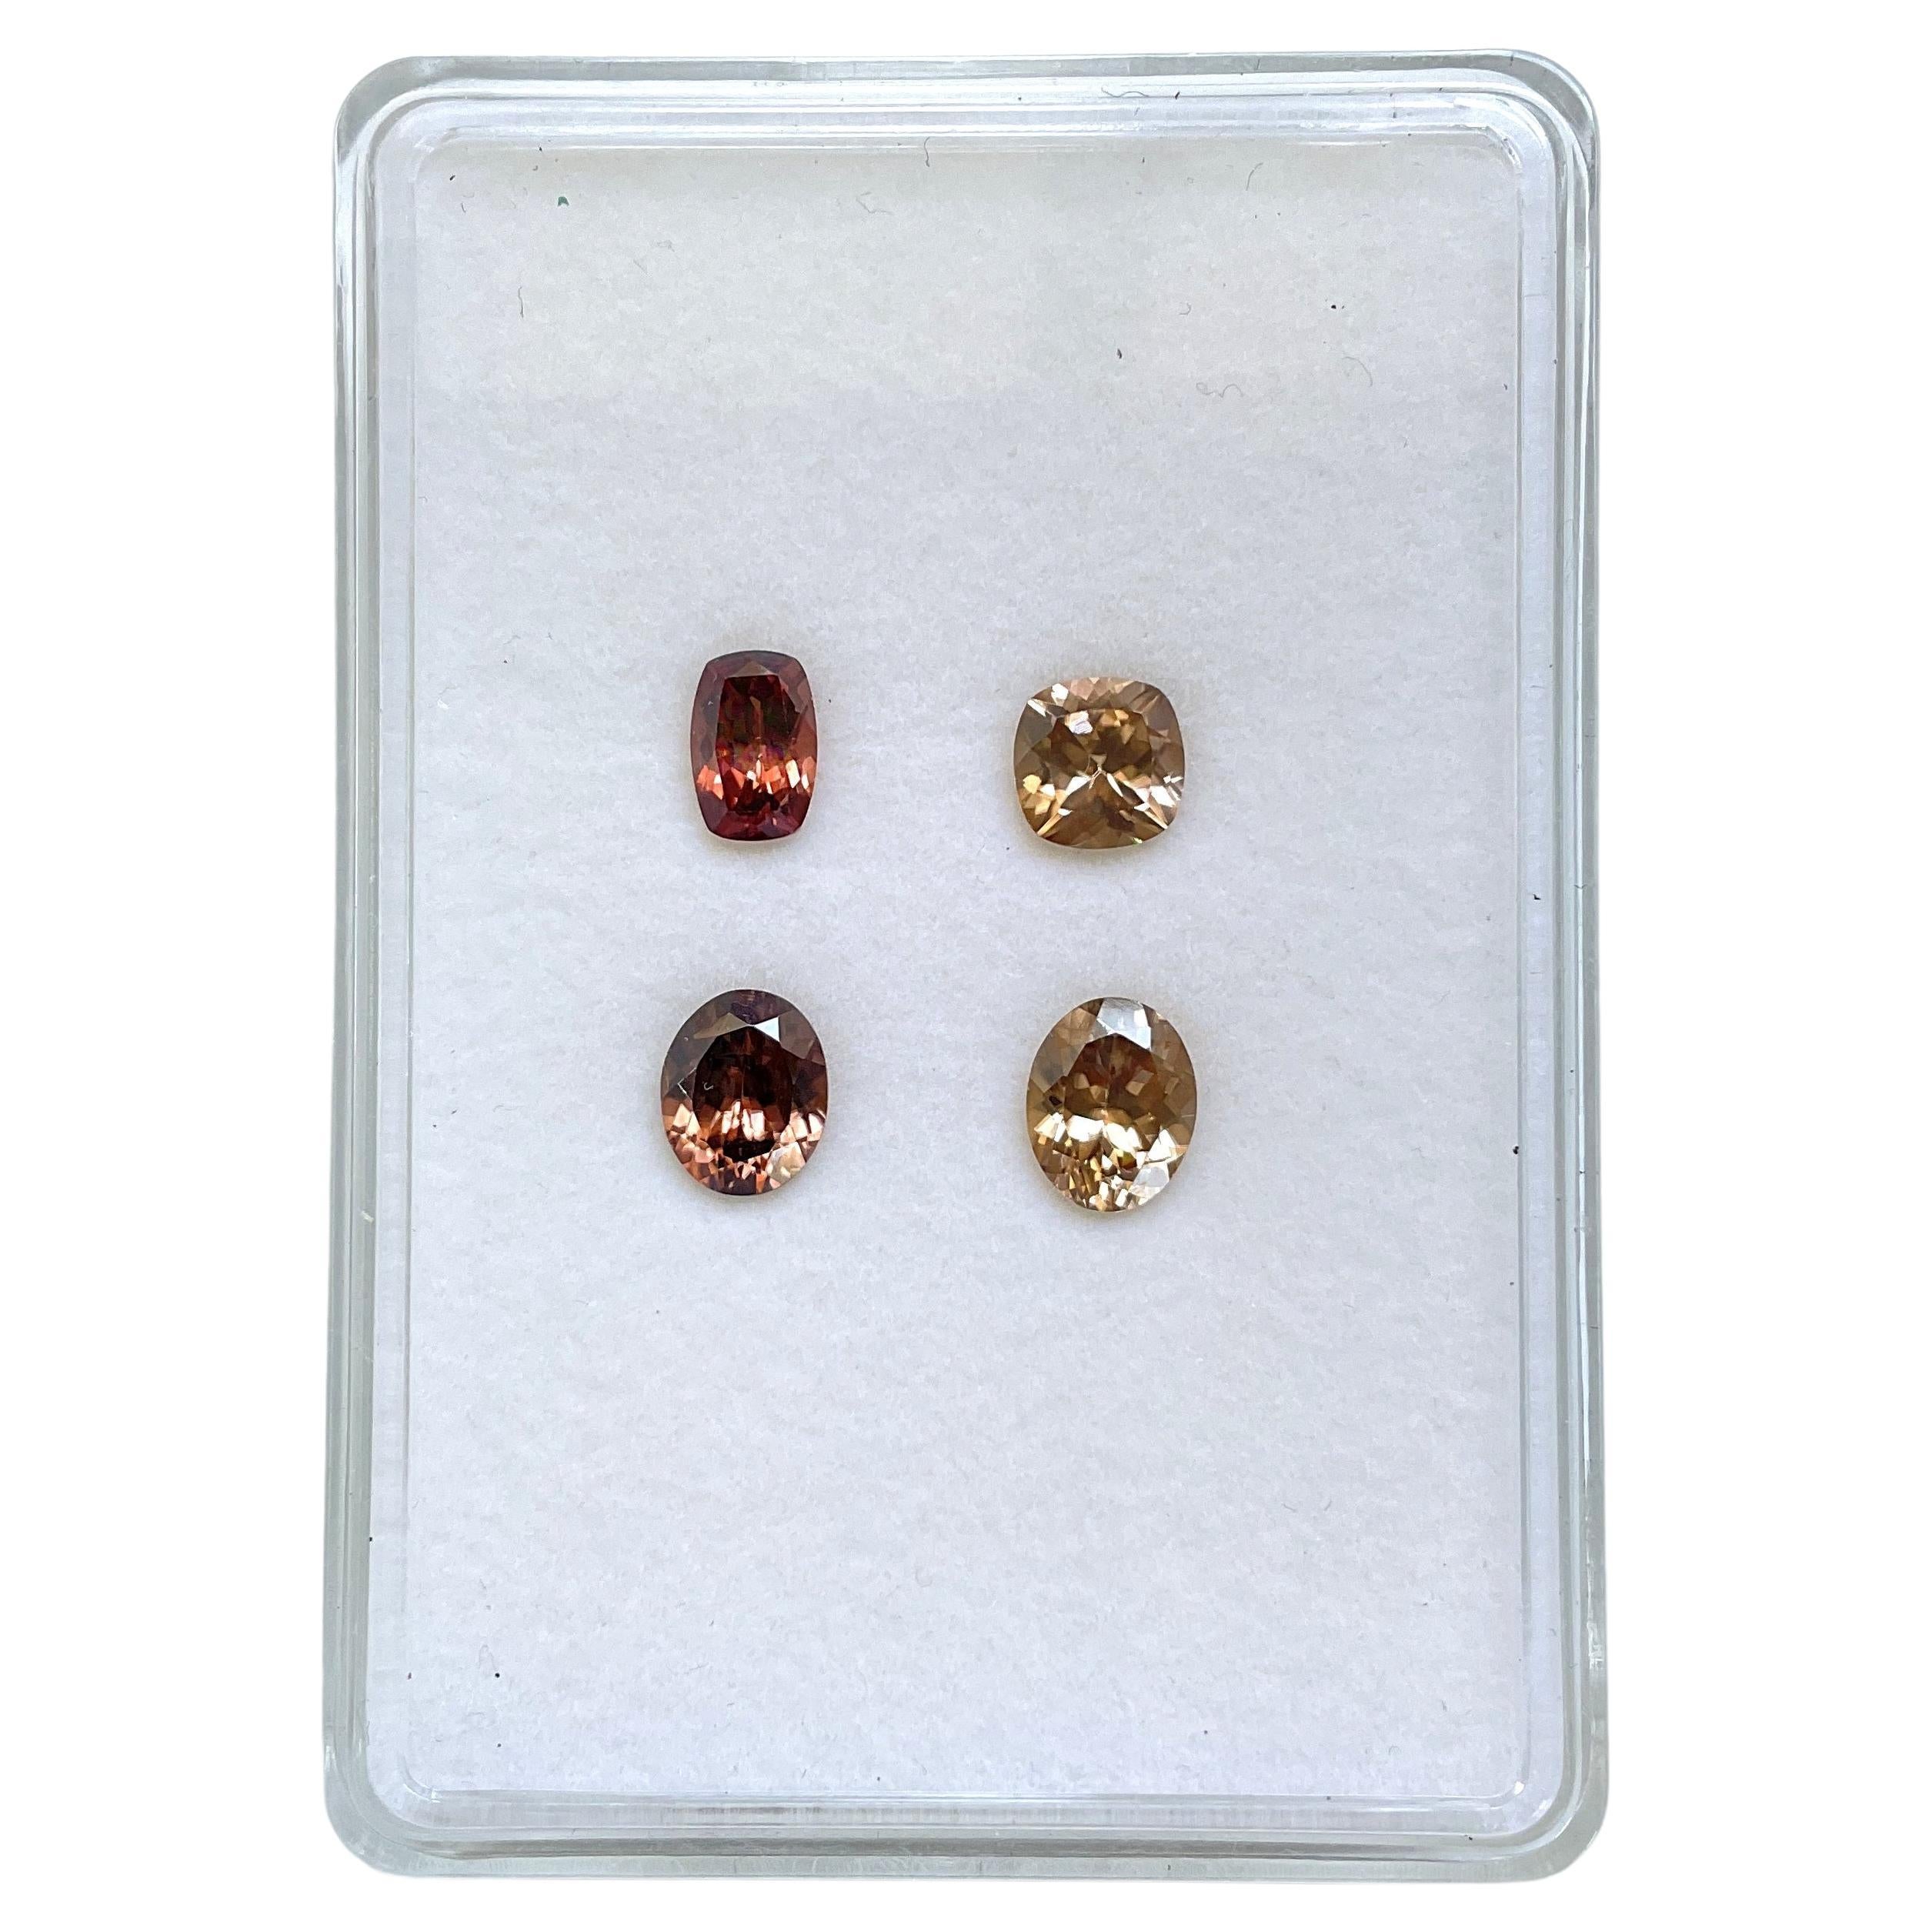 13.4 Carat Tanzania Zircon Natural Oval & Cushion Cutstone Fine Jewelry Gemstone For Sale